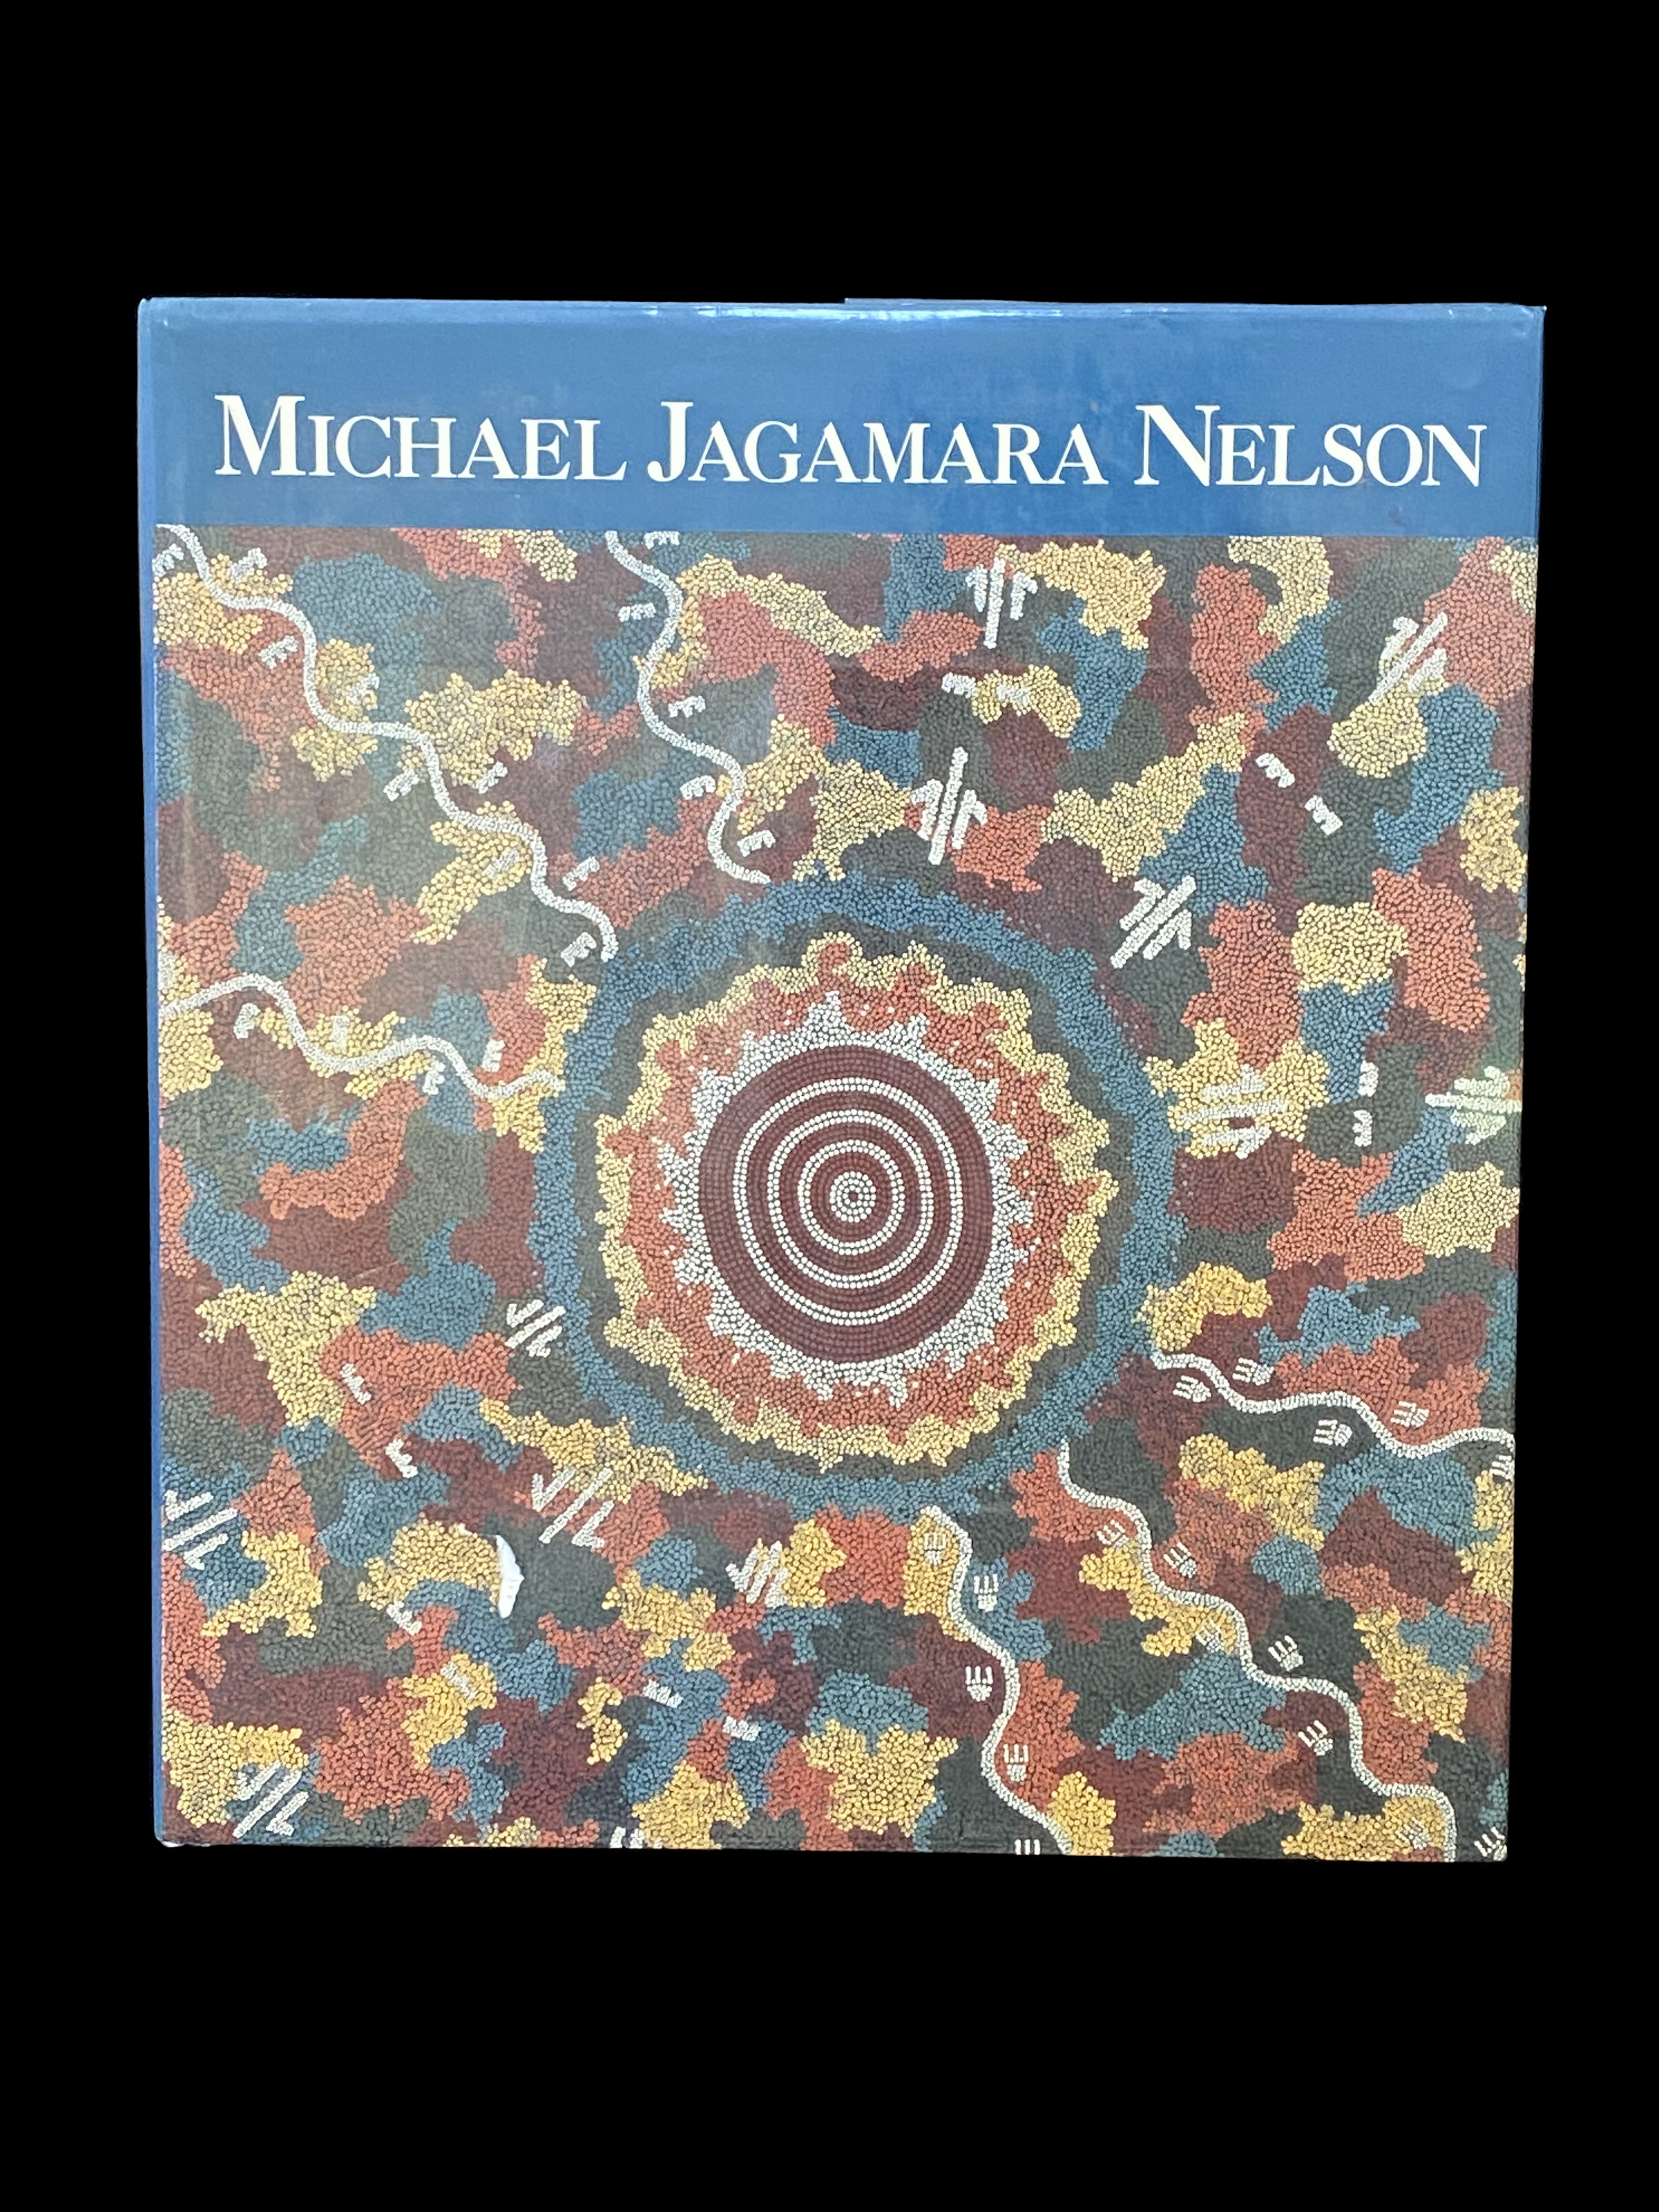 A book of the art of Michael Jagamara Nelson - by Vivien Johnson